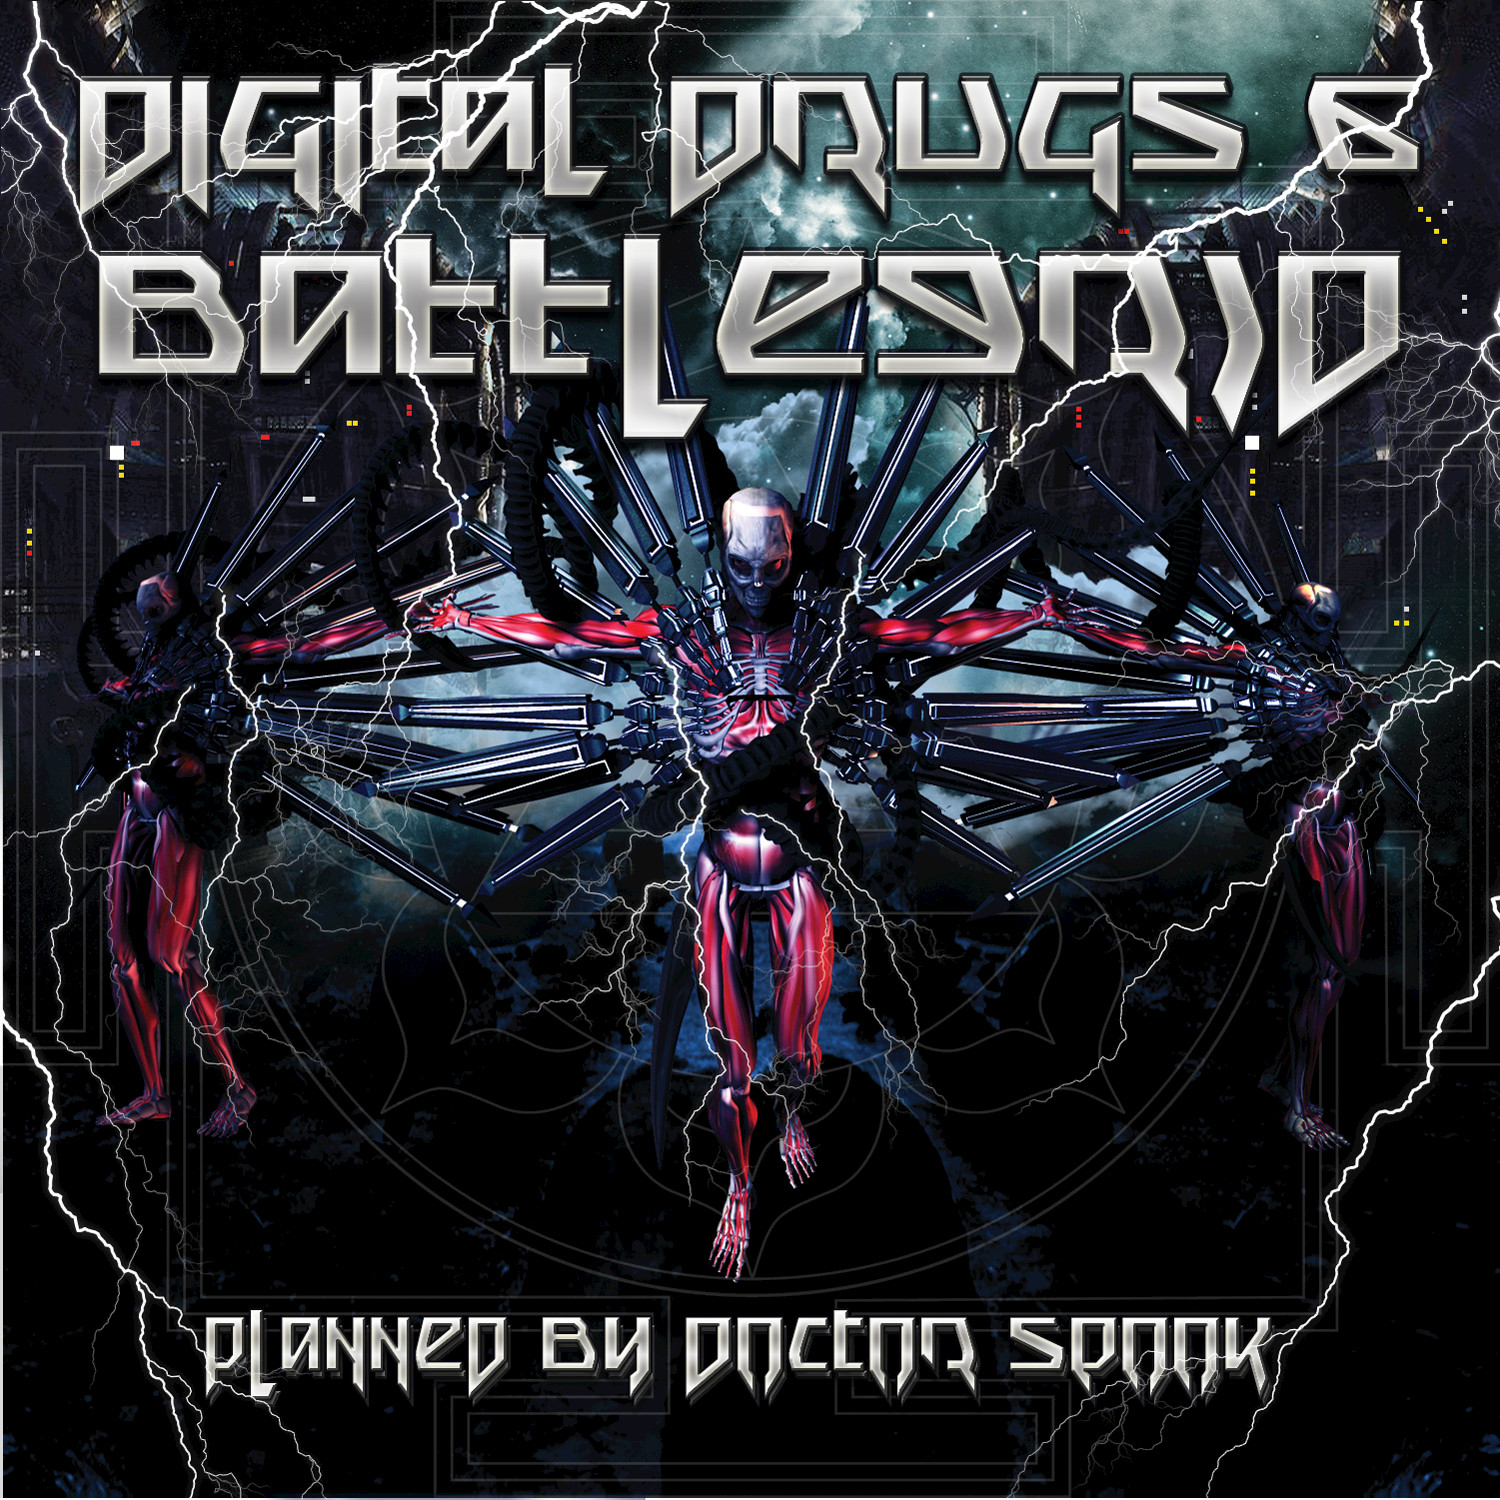 Digital Drugs 6 - Battle Grid Planned by Dr Spook - Best of Hi-tech, Darkpsy, Fullon, Psychedelic Trance and Neuro